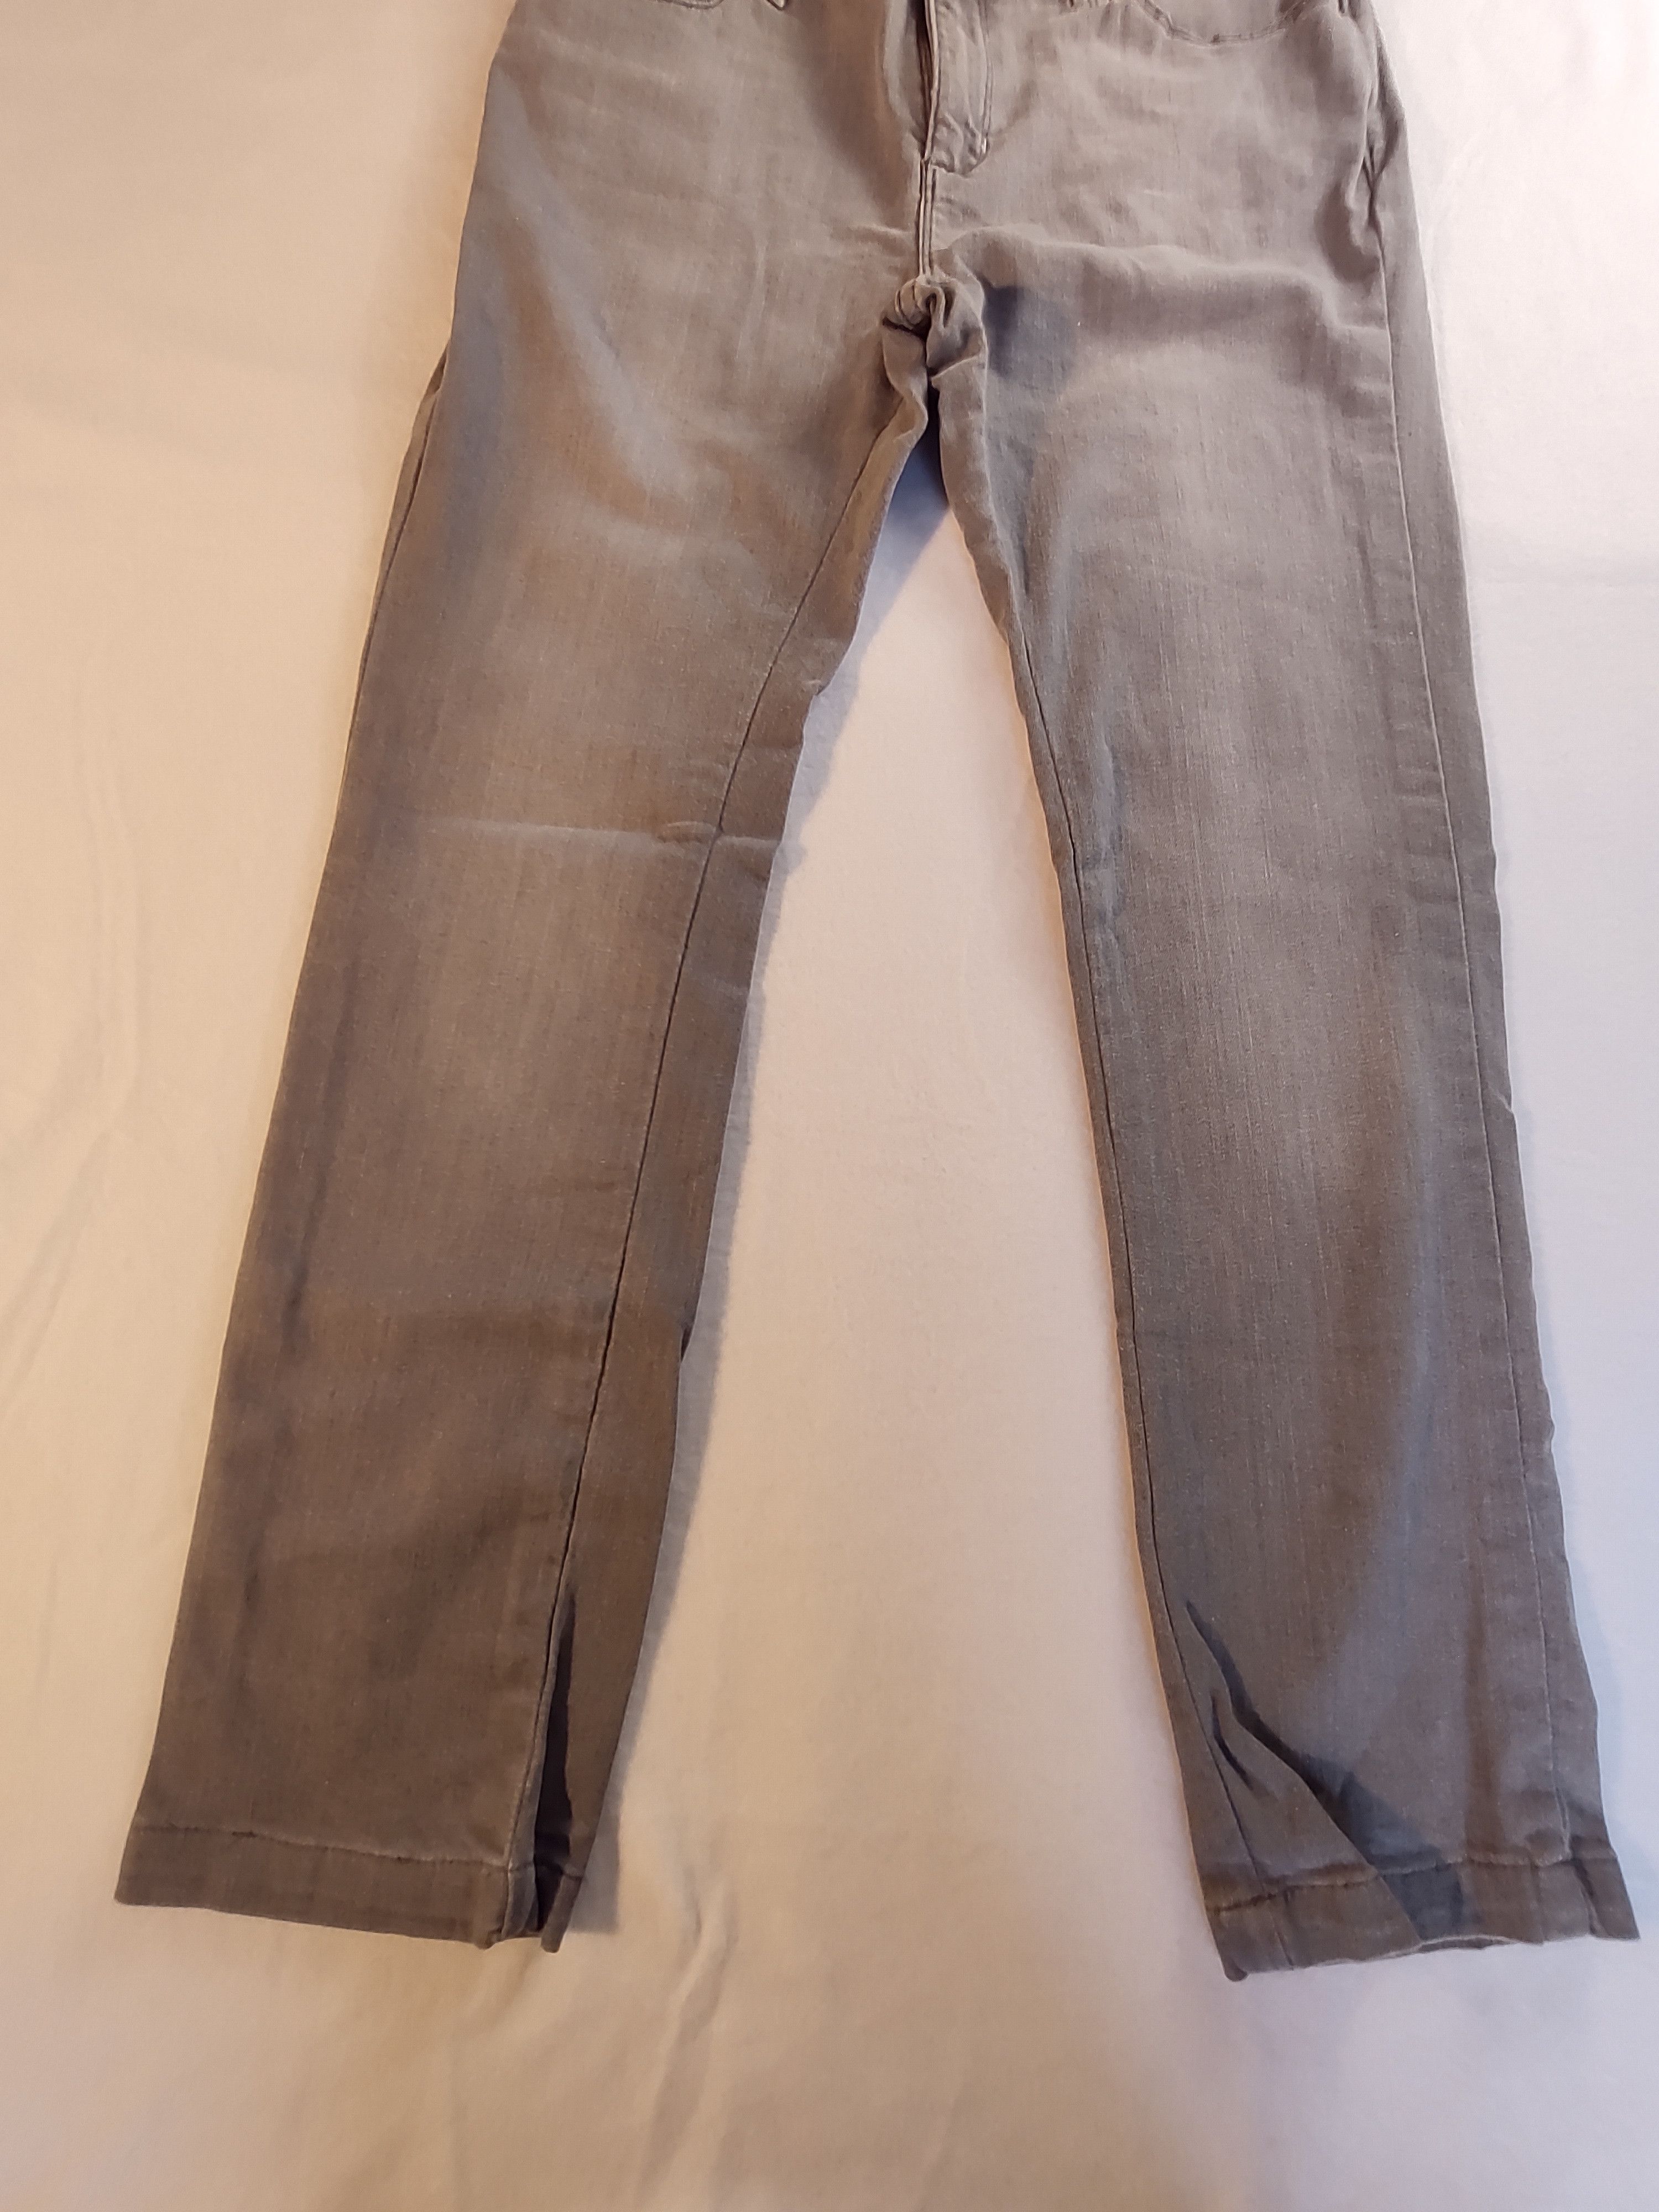 Lee Lee Perfect Fit Just Below Waist denim jeans gray ash wash Size 28" / US 6 / IT 42 - 2 Preview